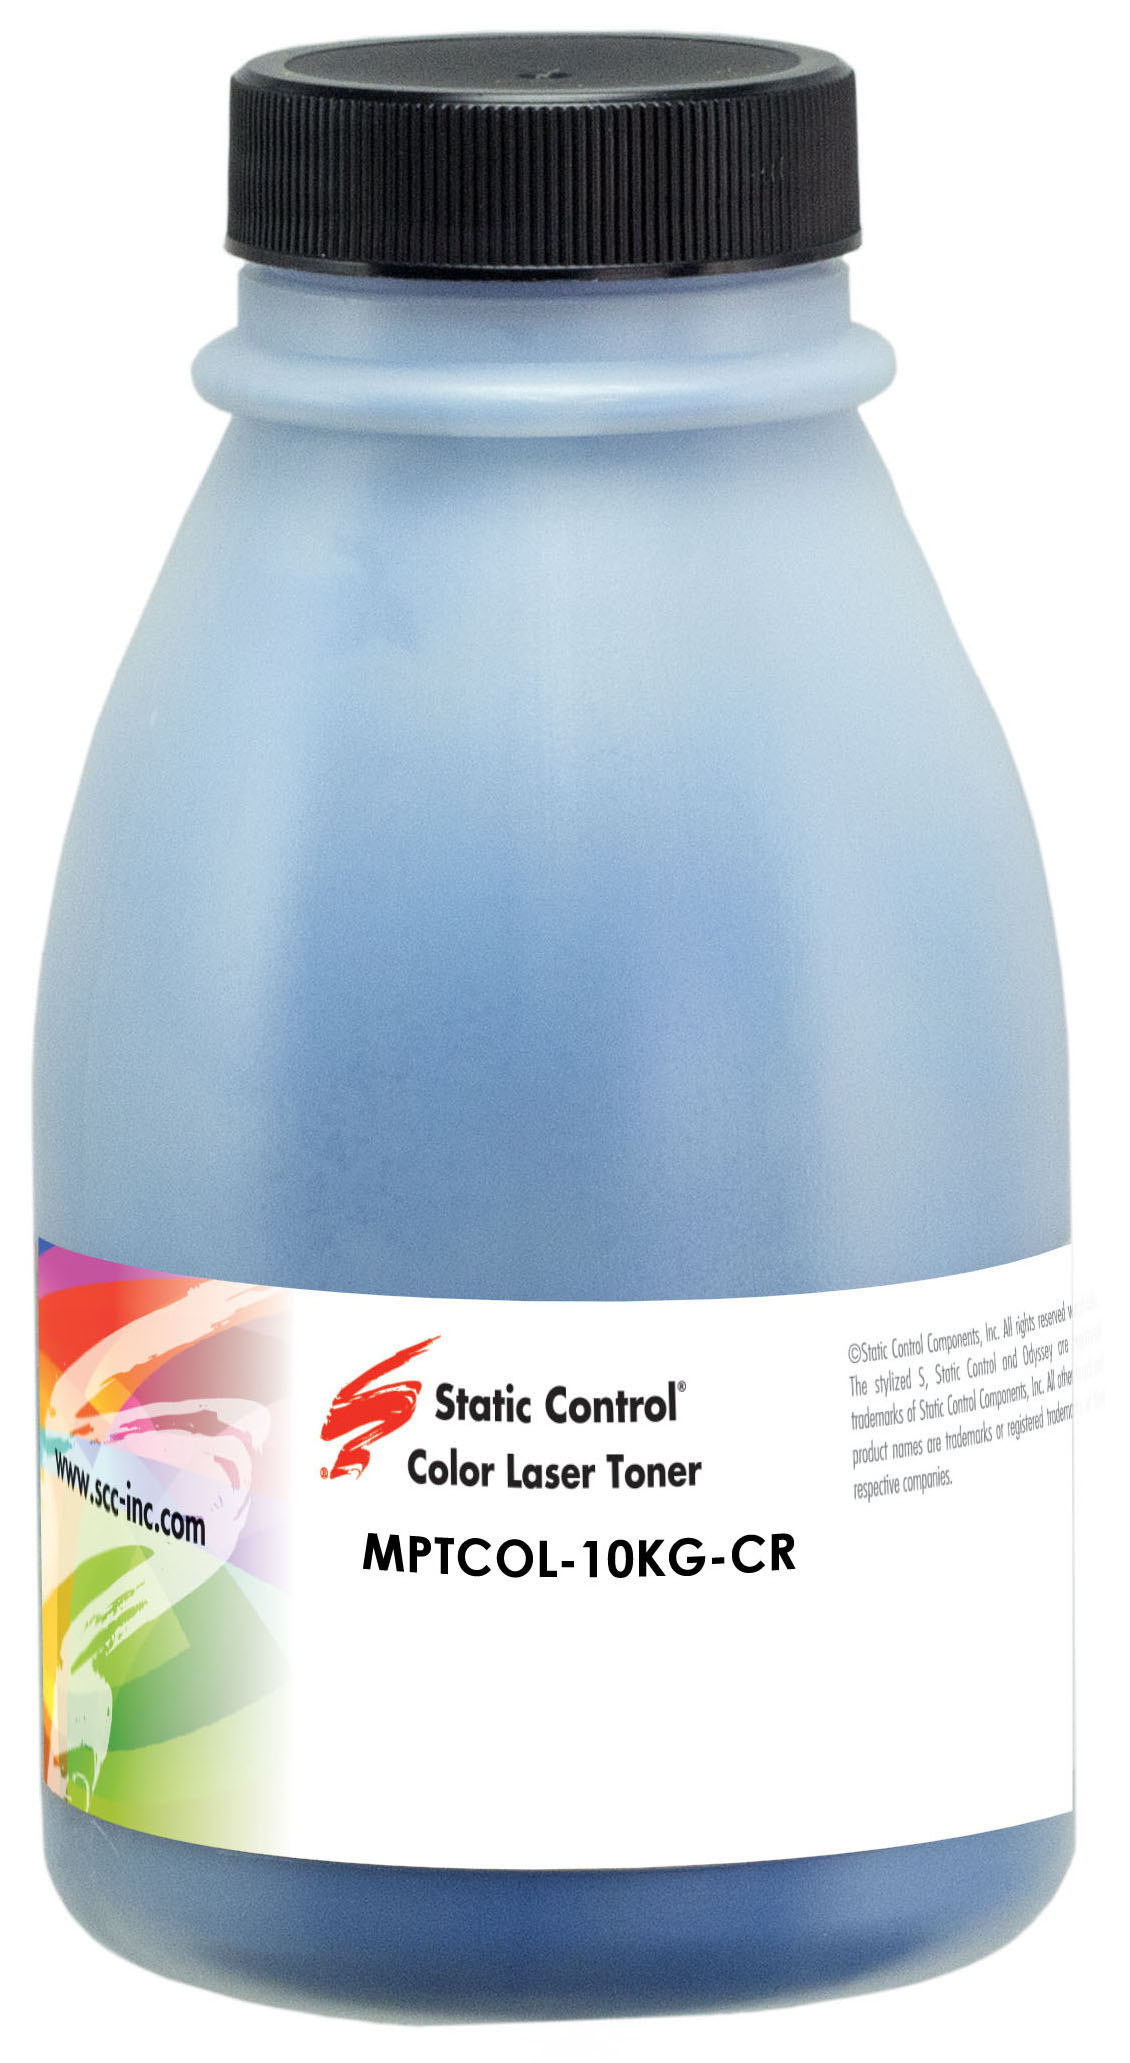 mptcol-10kg-cr_0